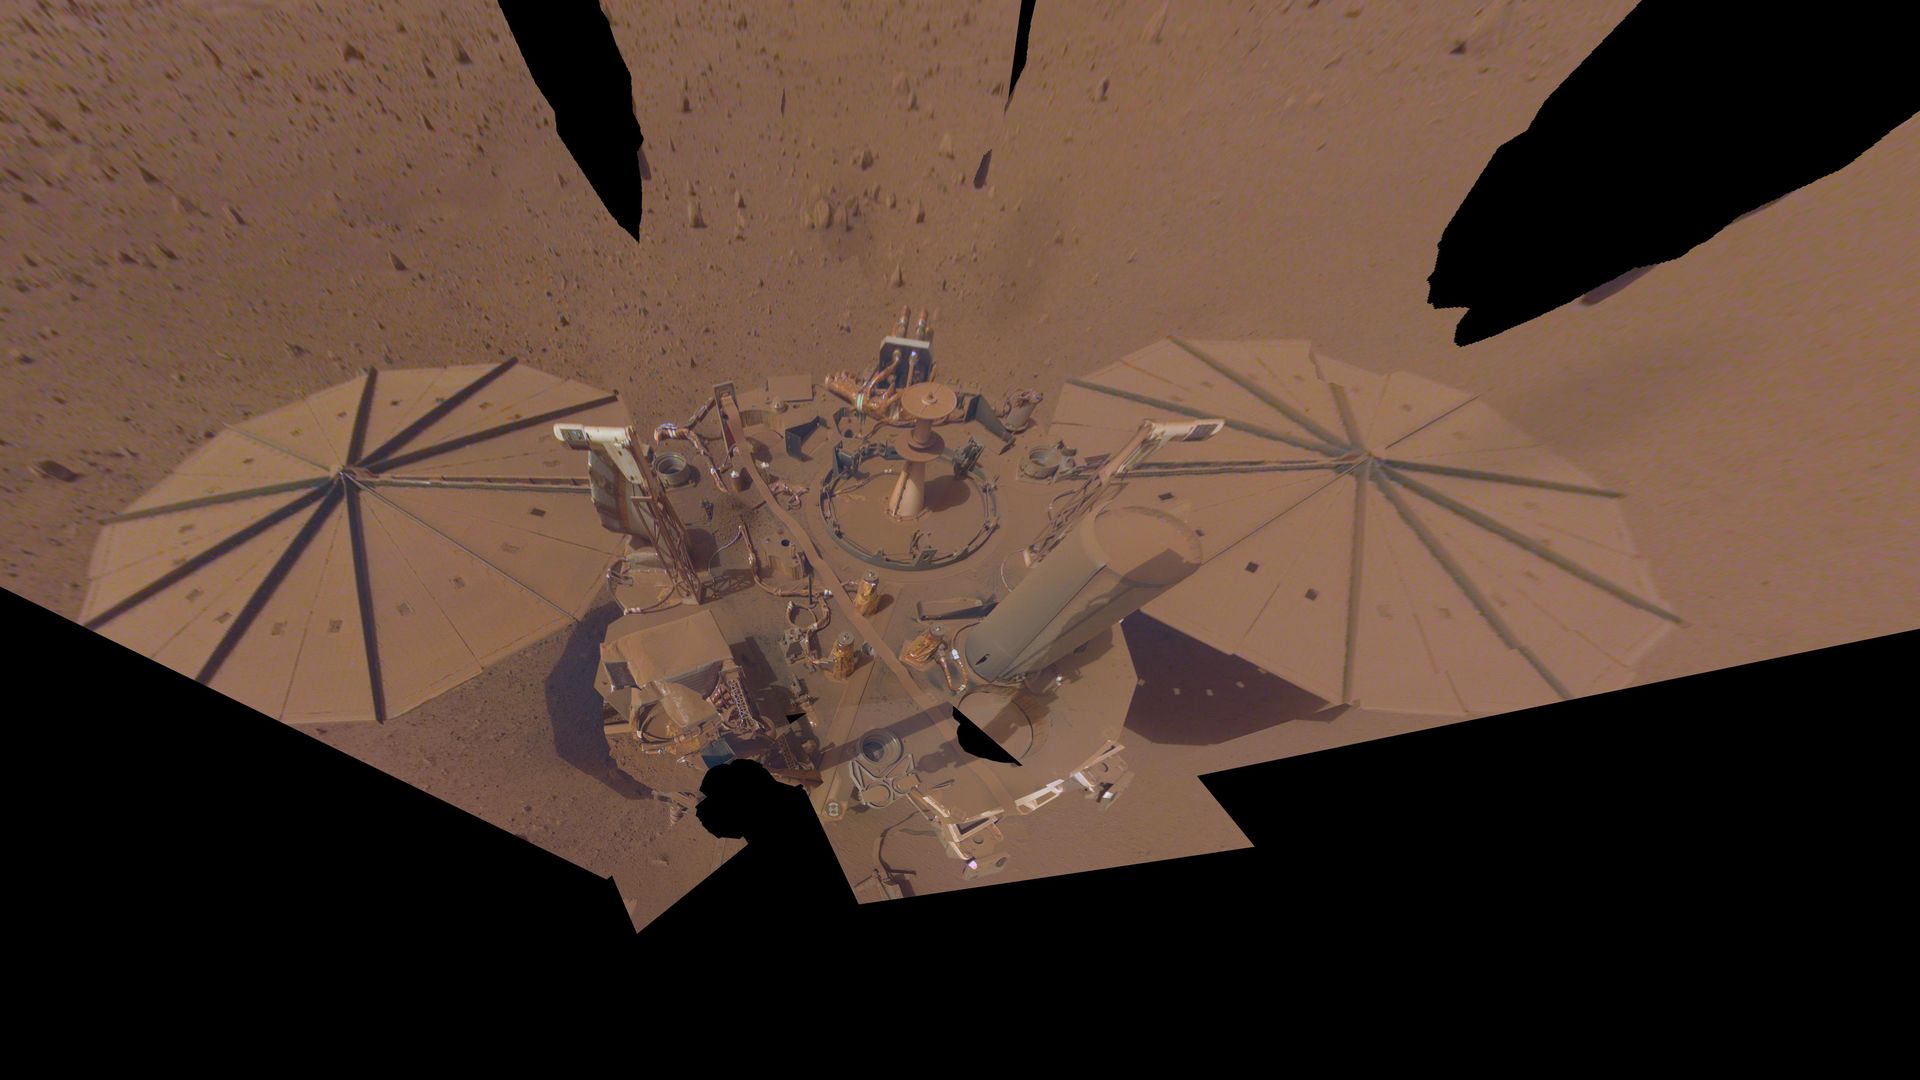 Final selfie taken by NASA InSight lander of itself covered in dust